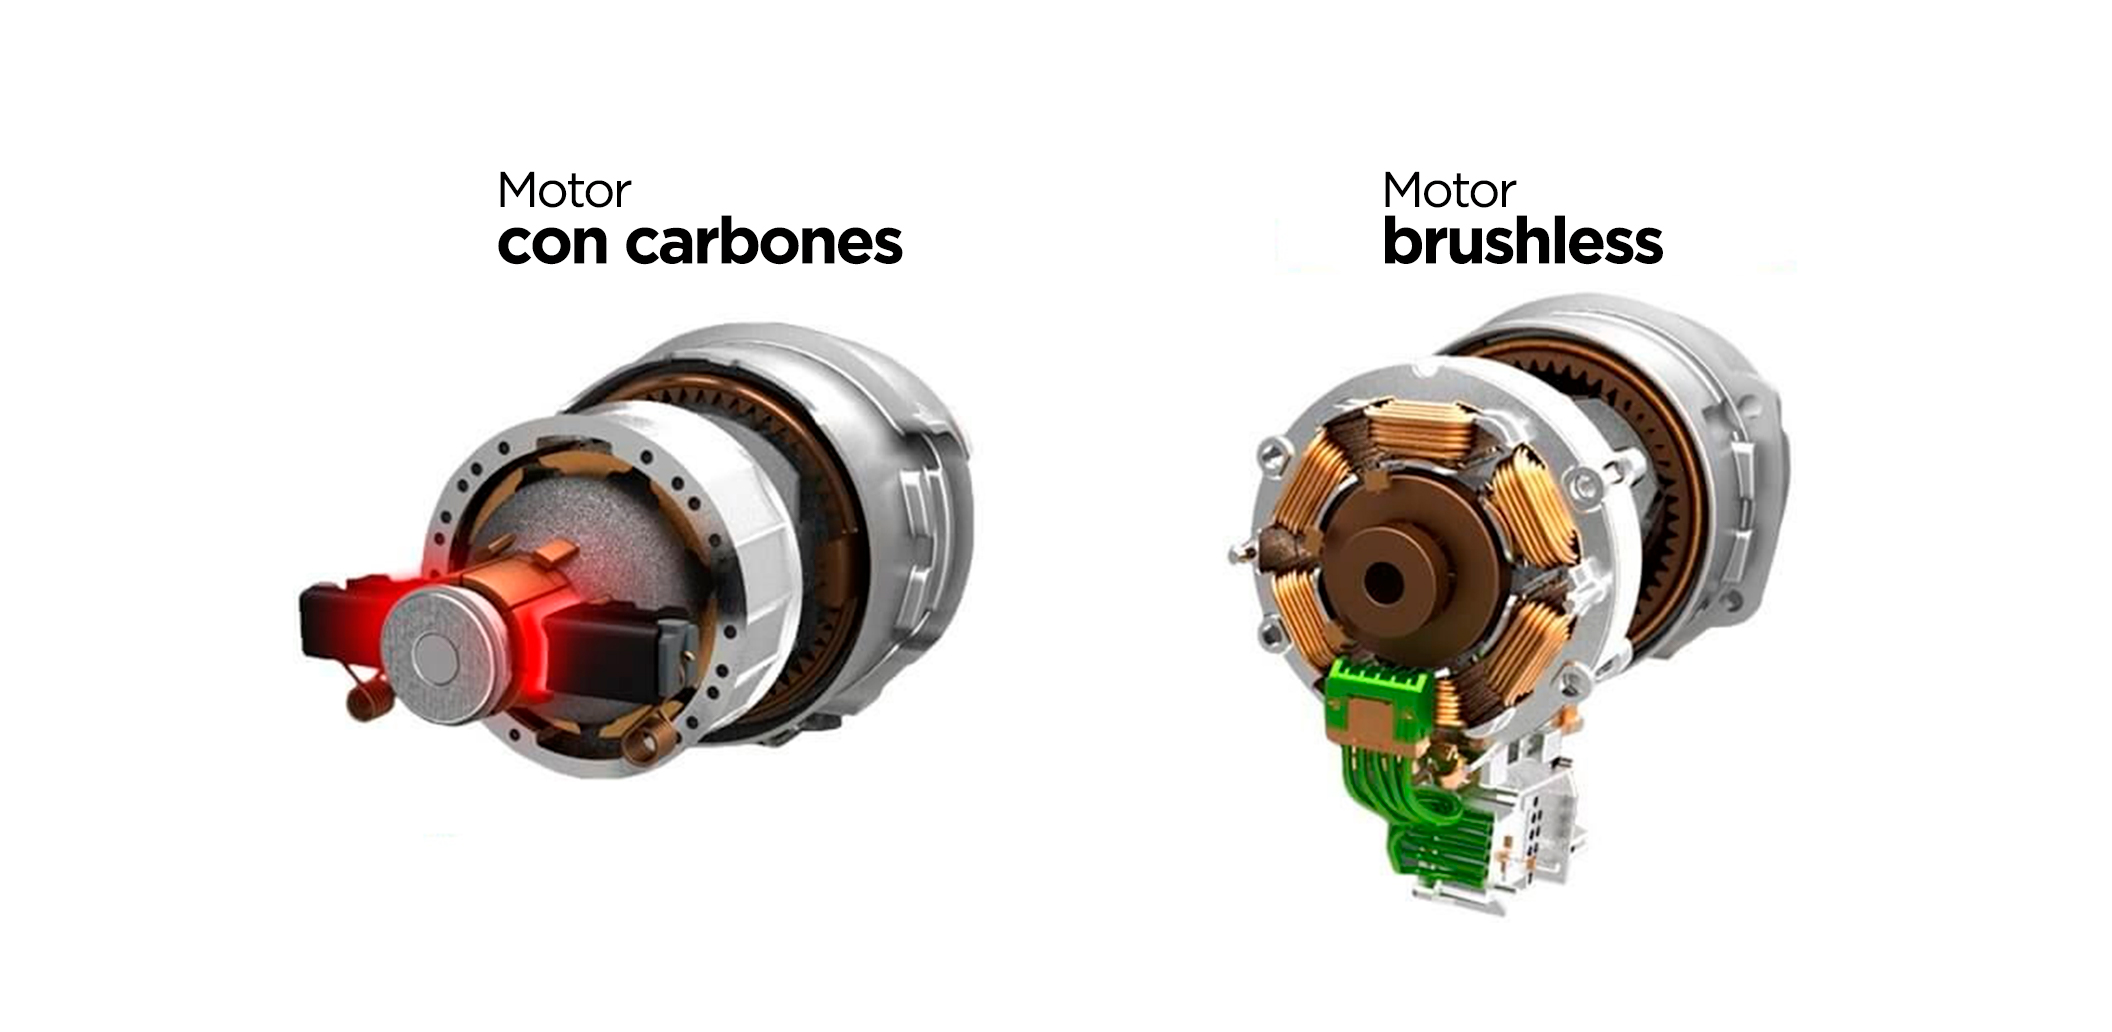 Diferencias entre motor brushless y motor a carbones